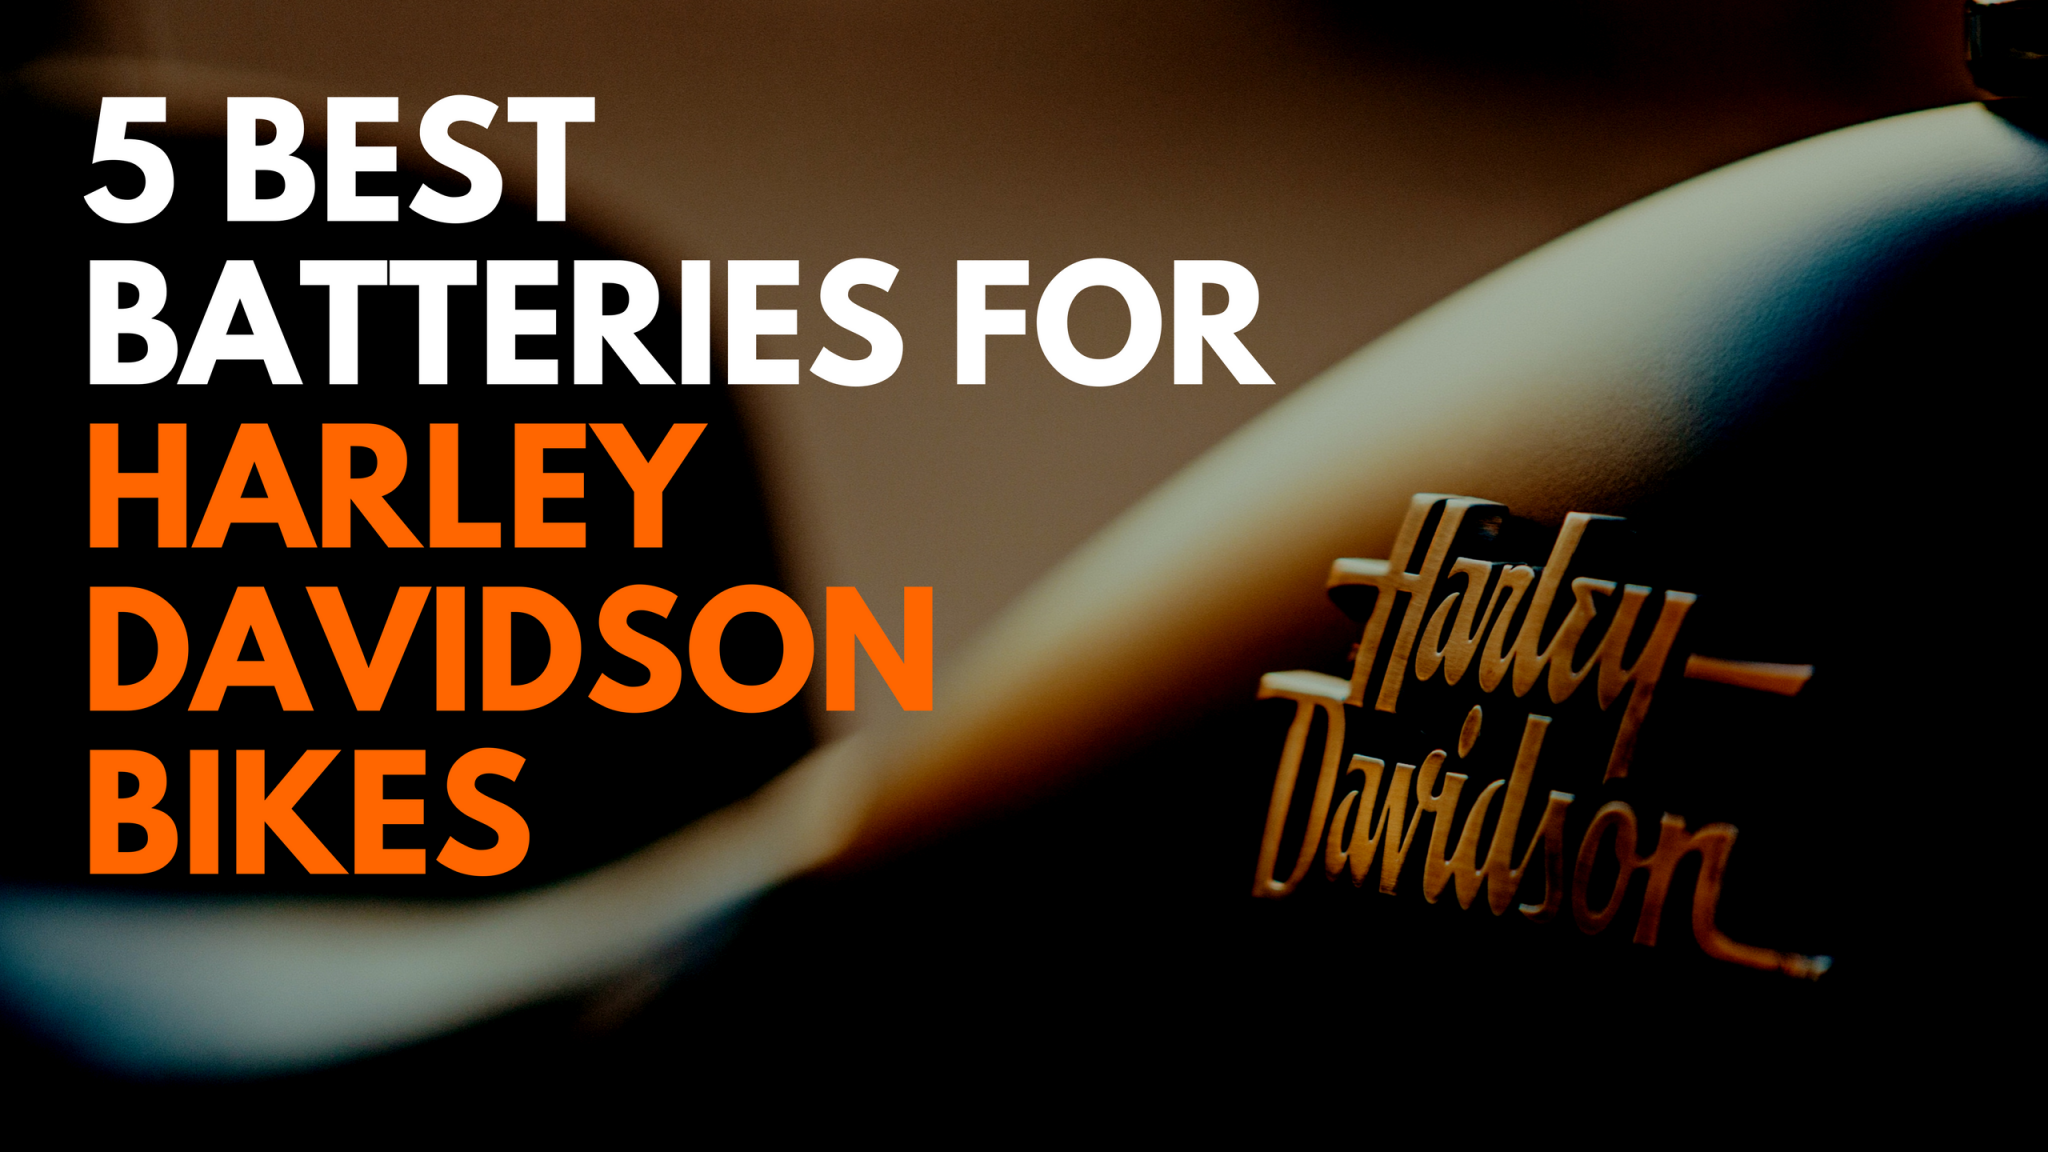 5 Best Batteries for Harley Davidson Bikes